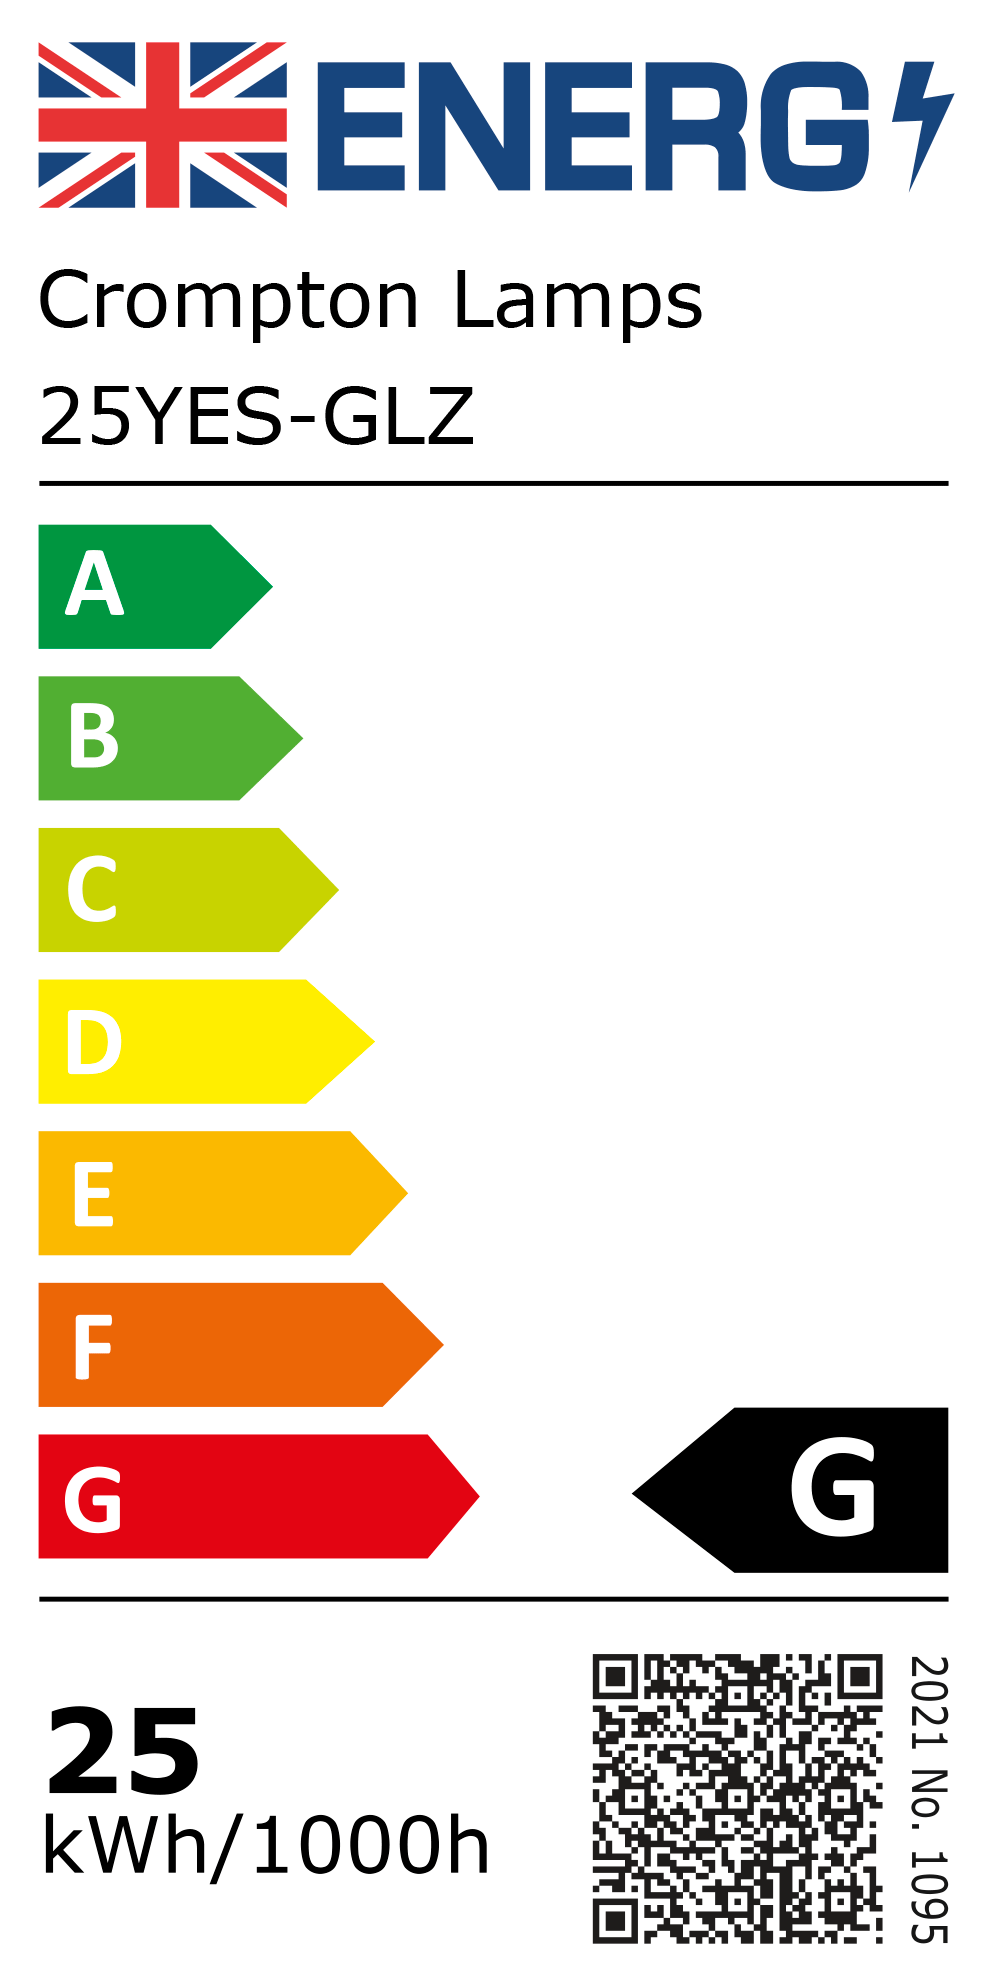 New 2021 Energy Rating Label: Stock Code 25YES-GLZ